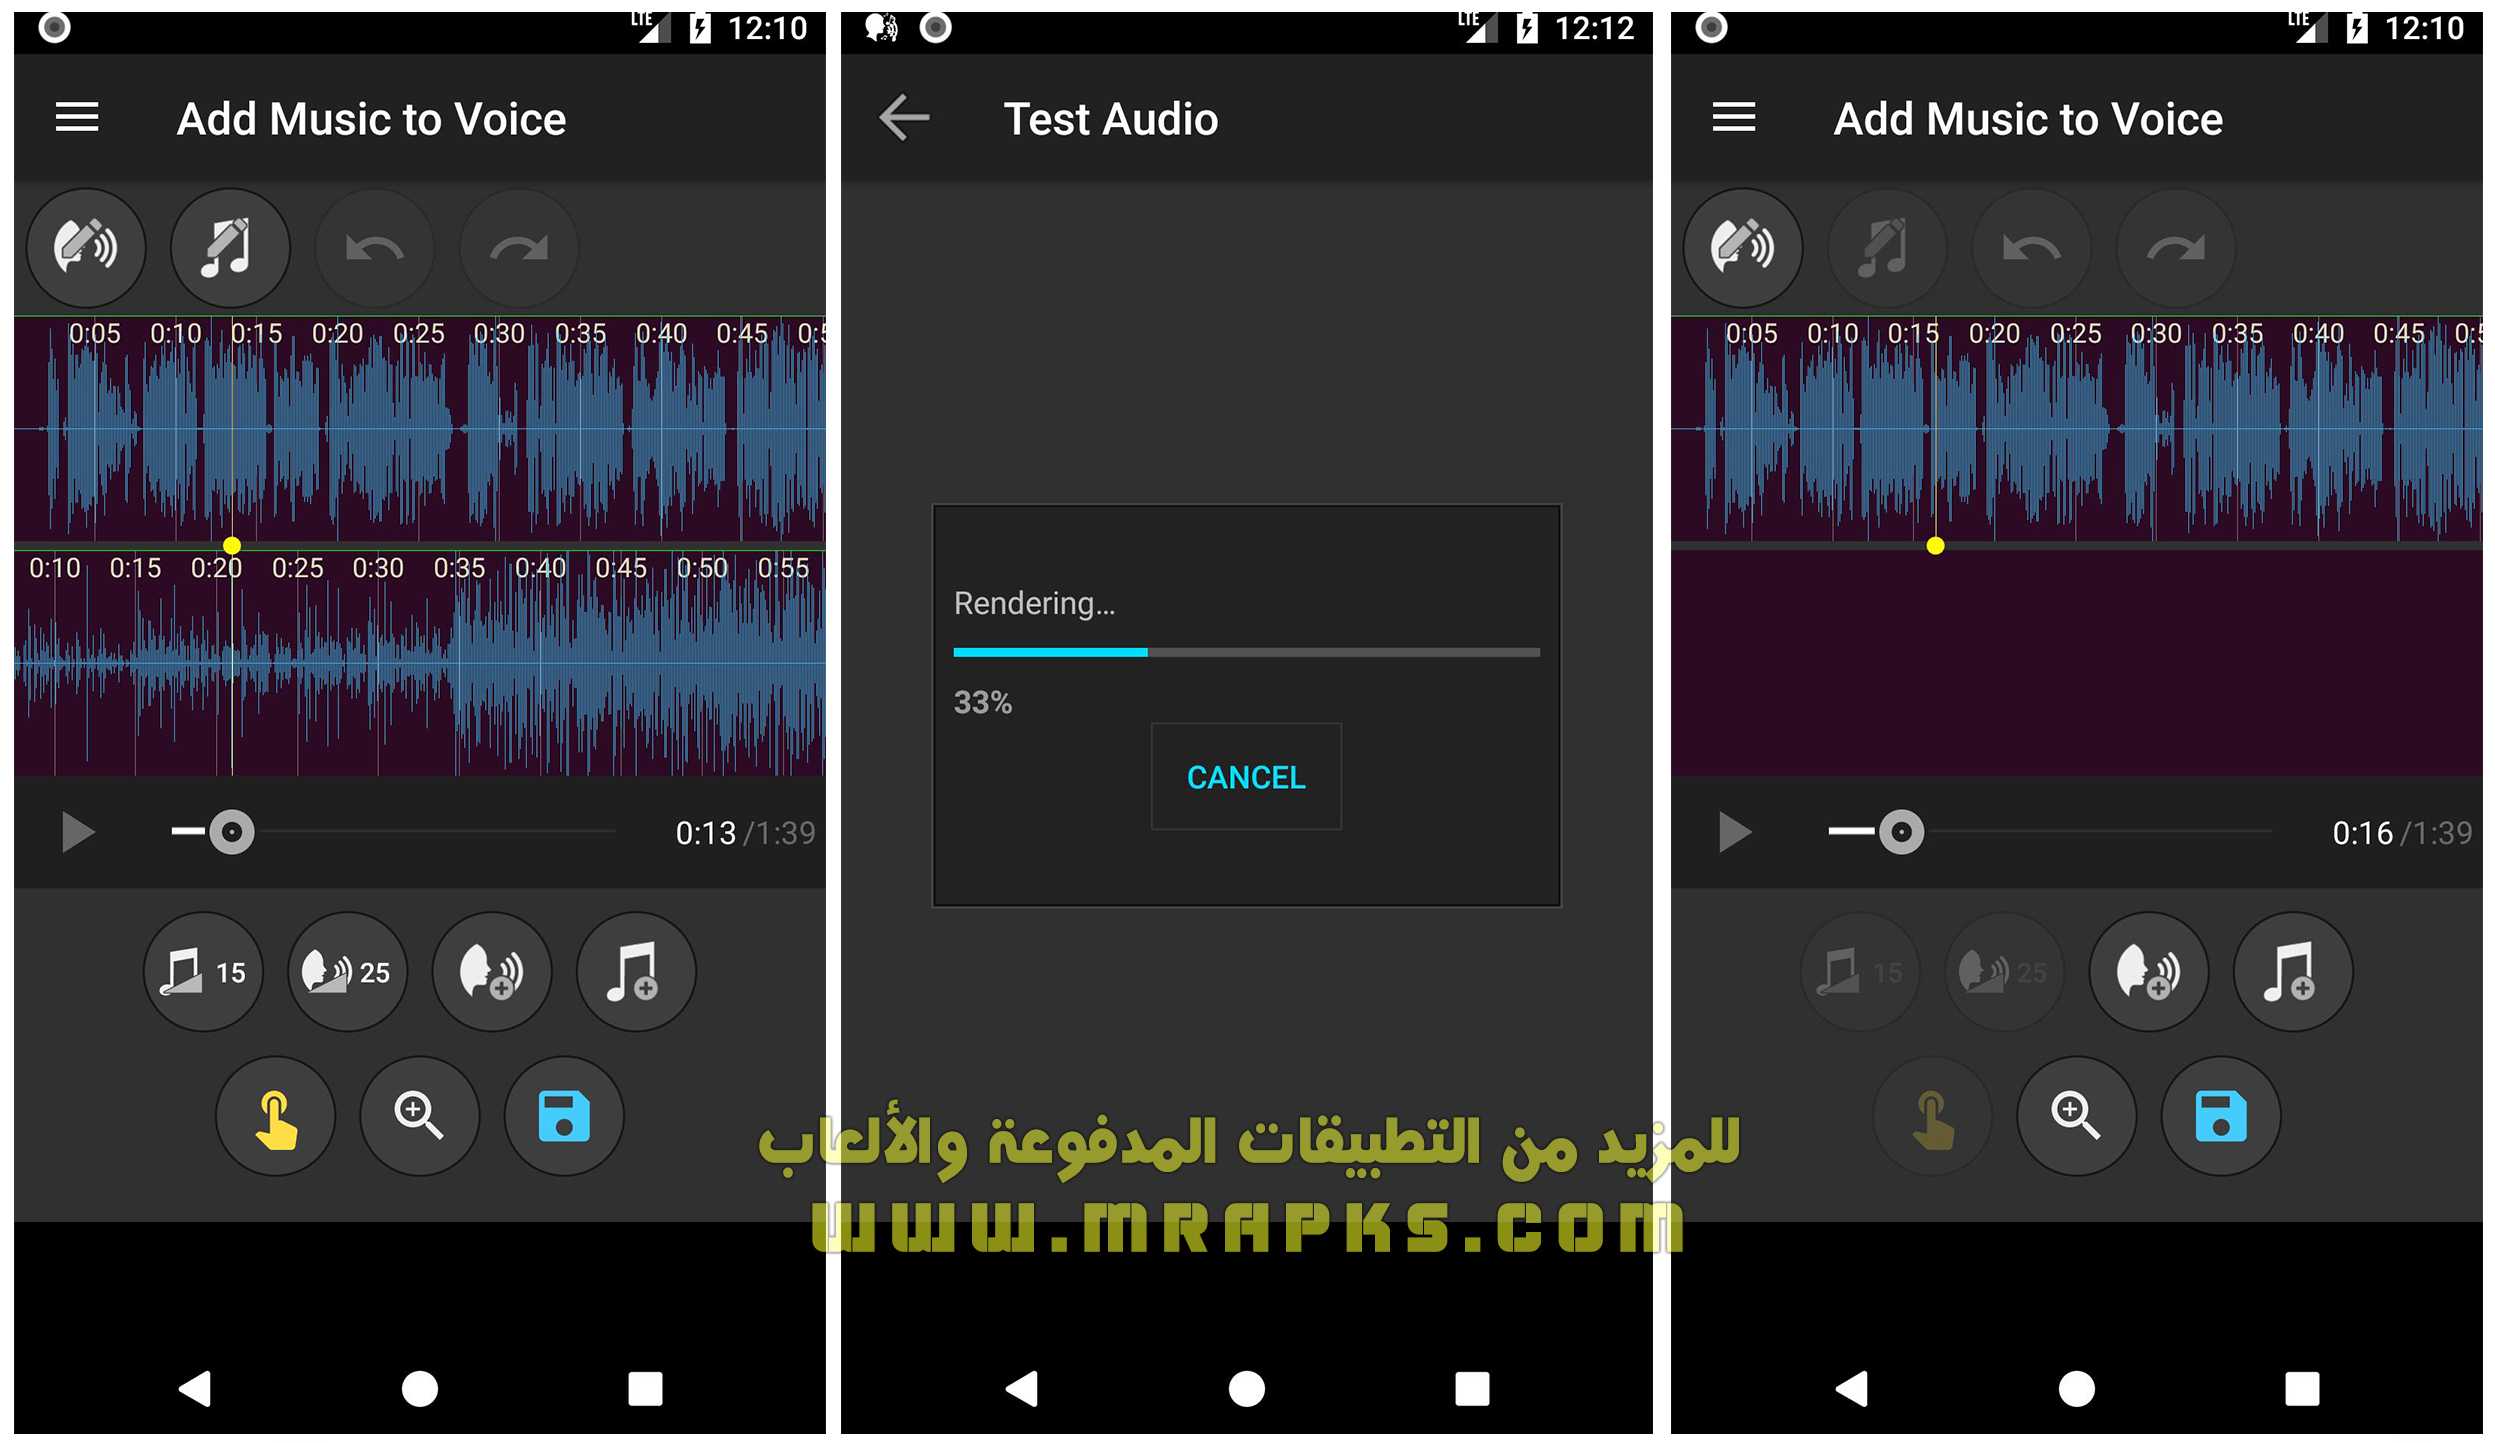 Add Music to Voice v2.0.3 (Premium) APK